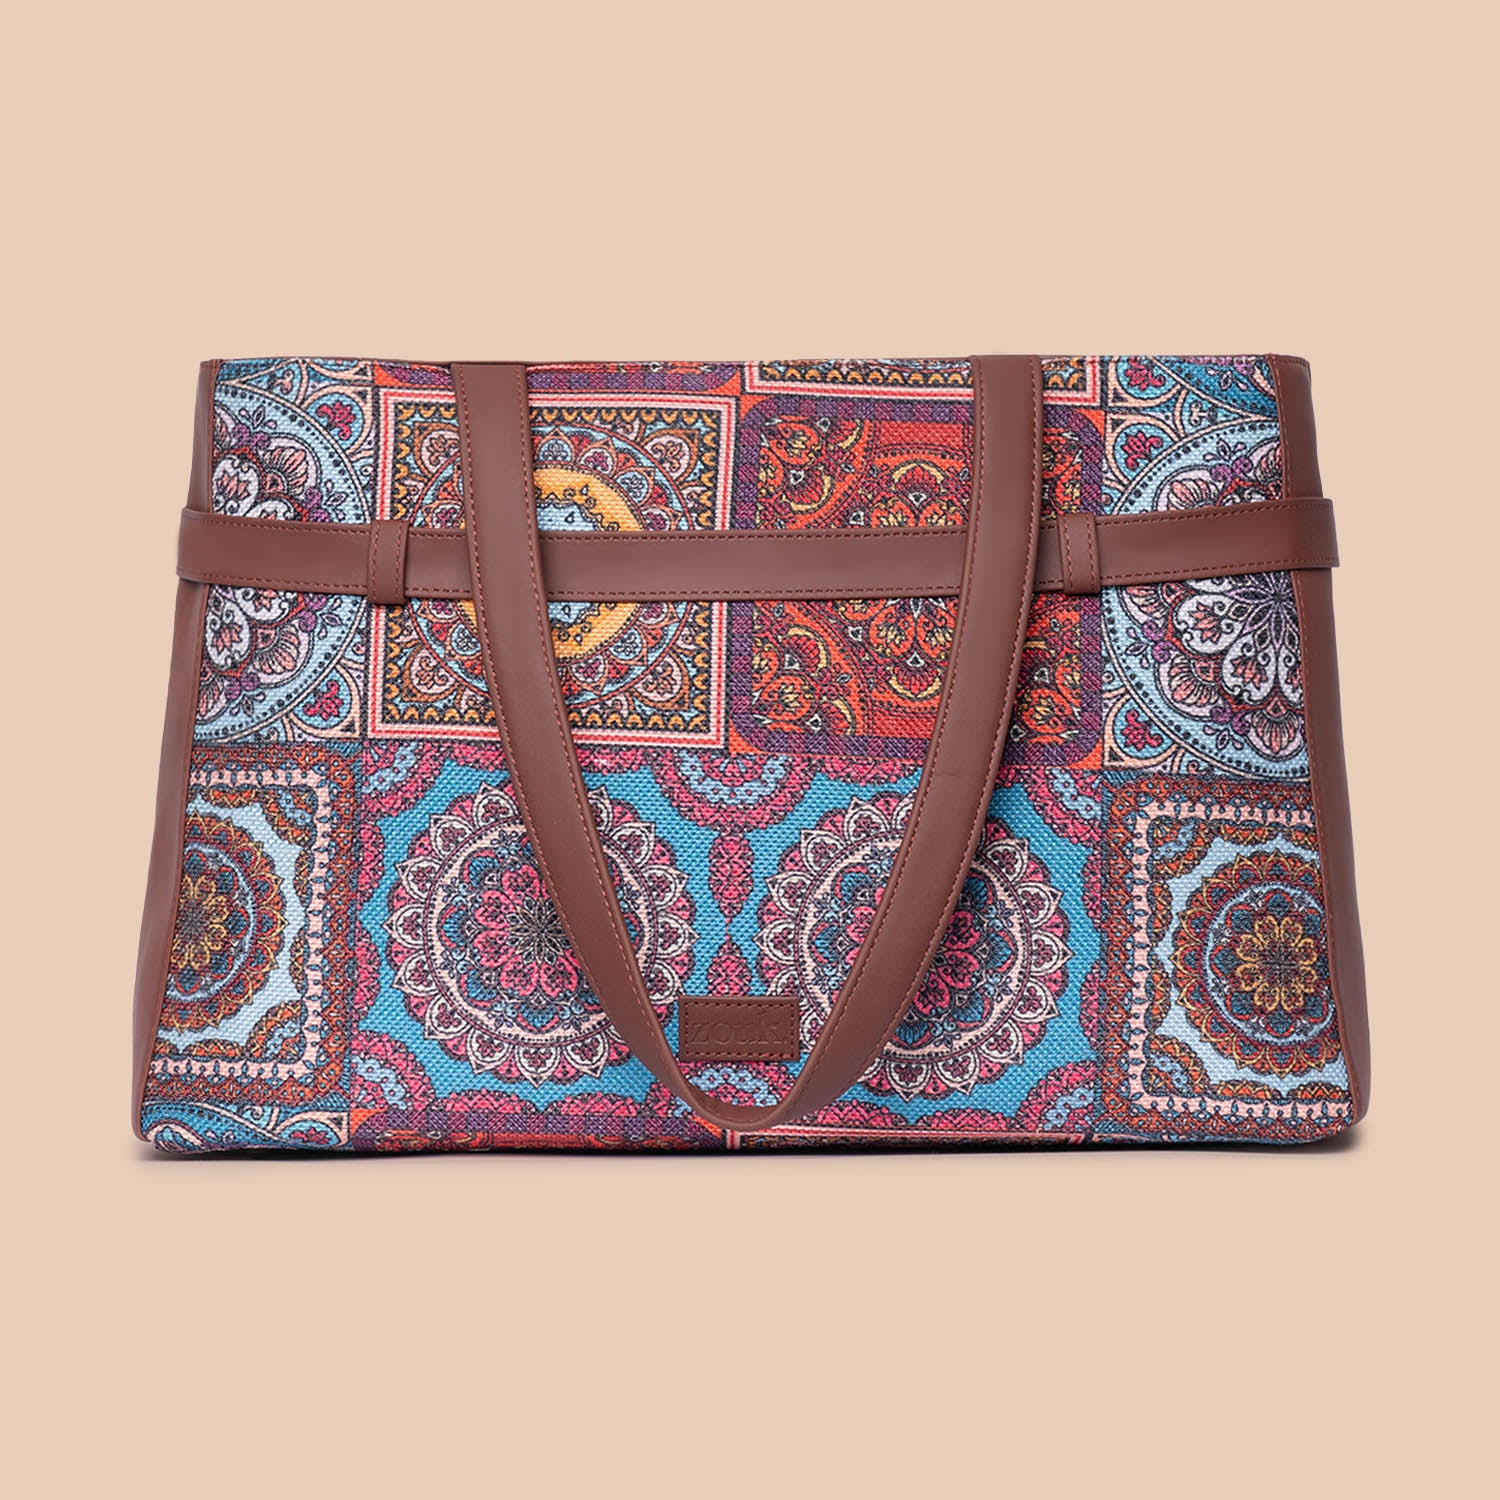 Multicolor Mandala Print - Statement Office Bag & U-Shaped Sling Bag Combo